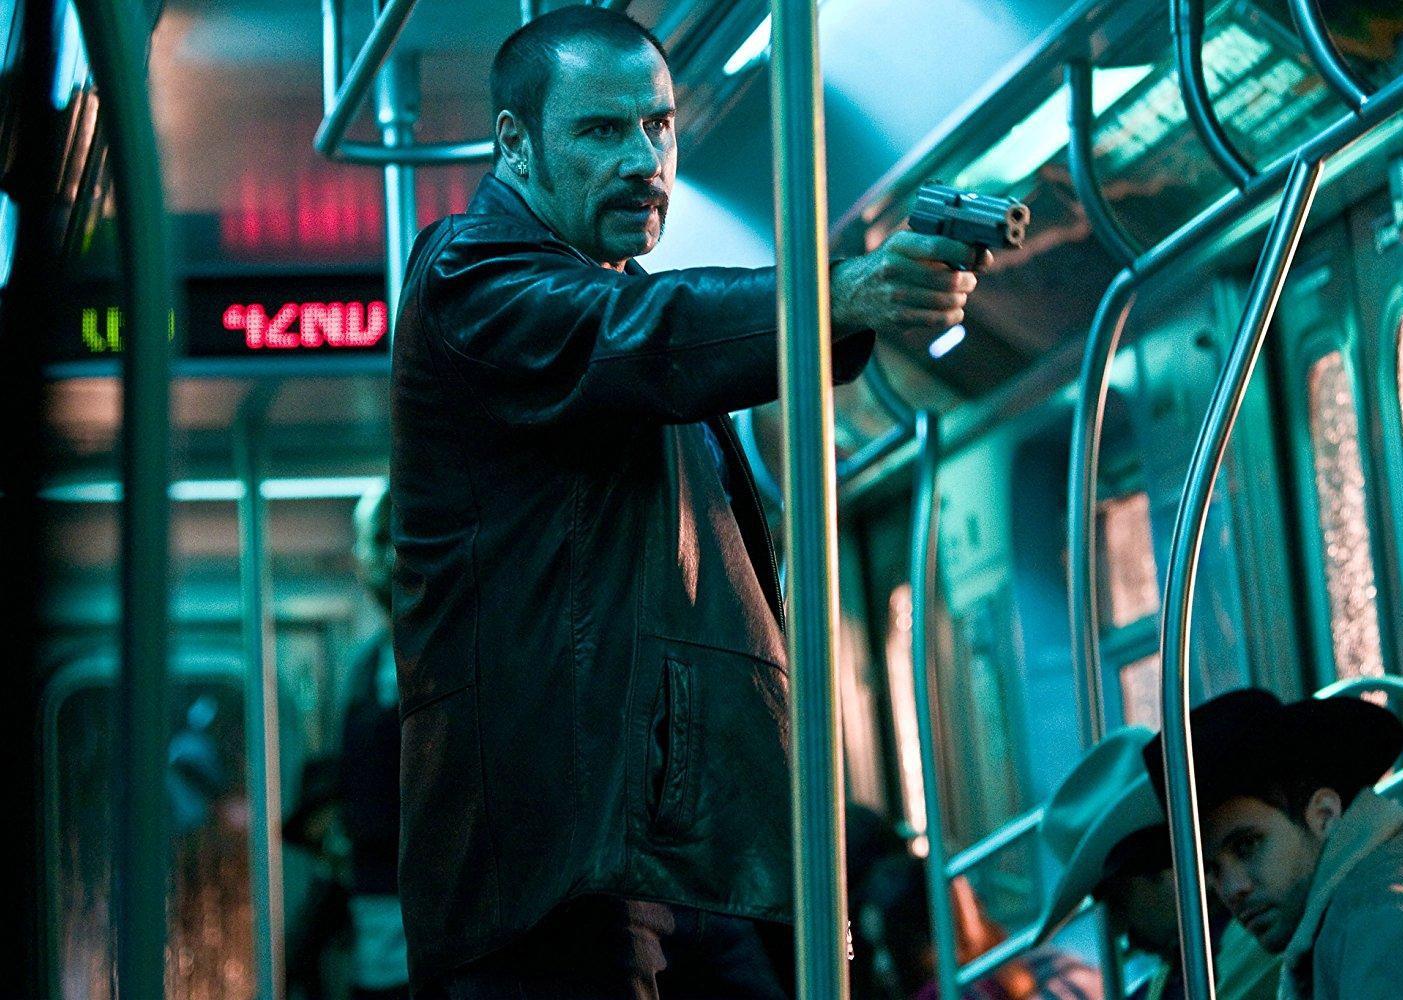 John Travolta, with short hair and a mustache, pointing a gun on a train.